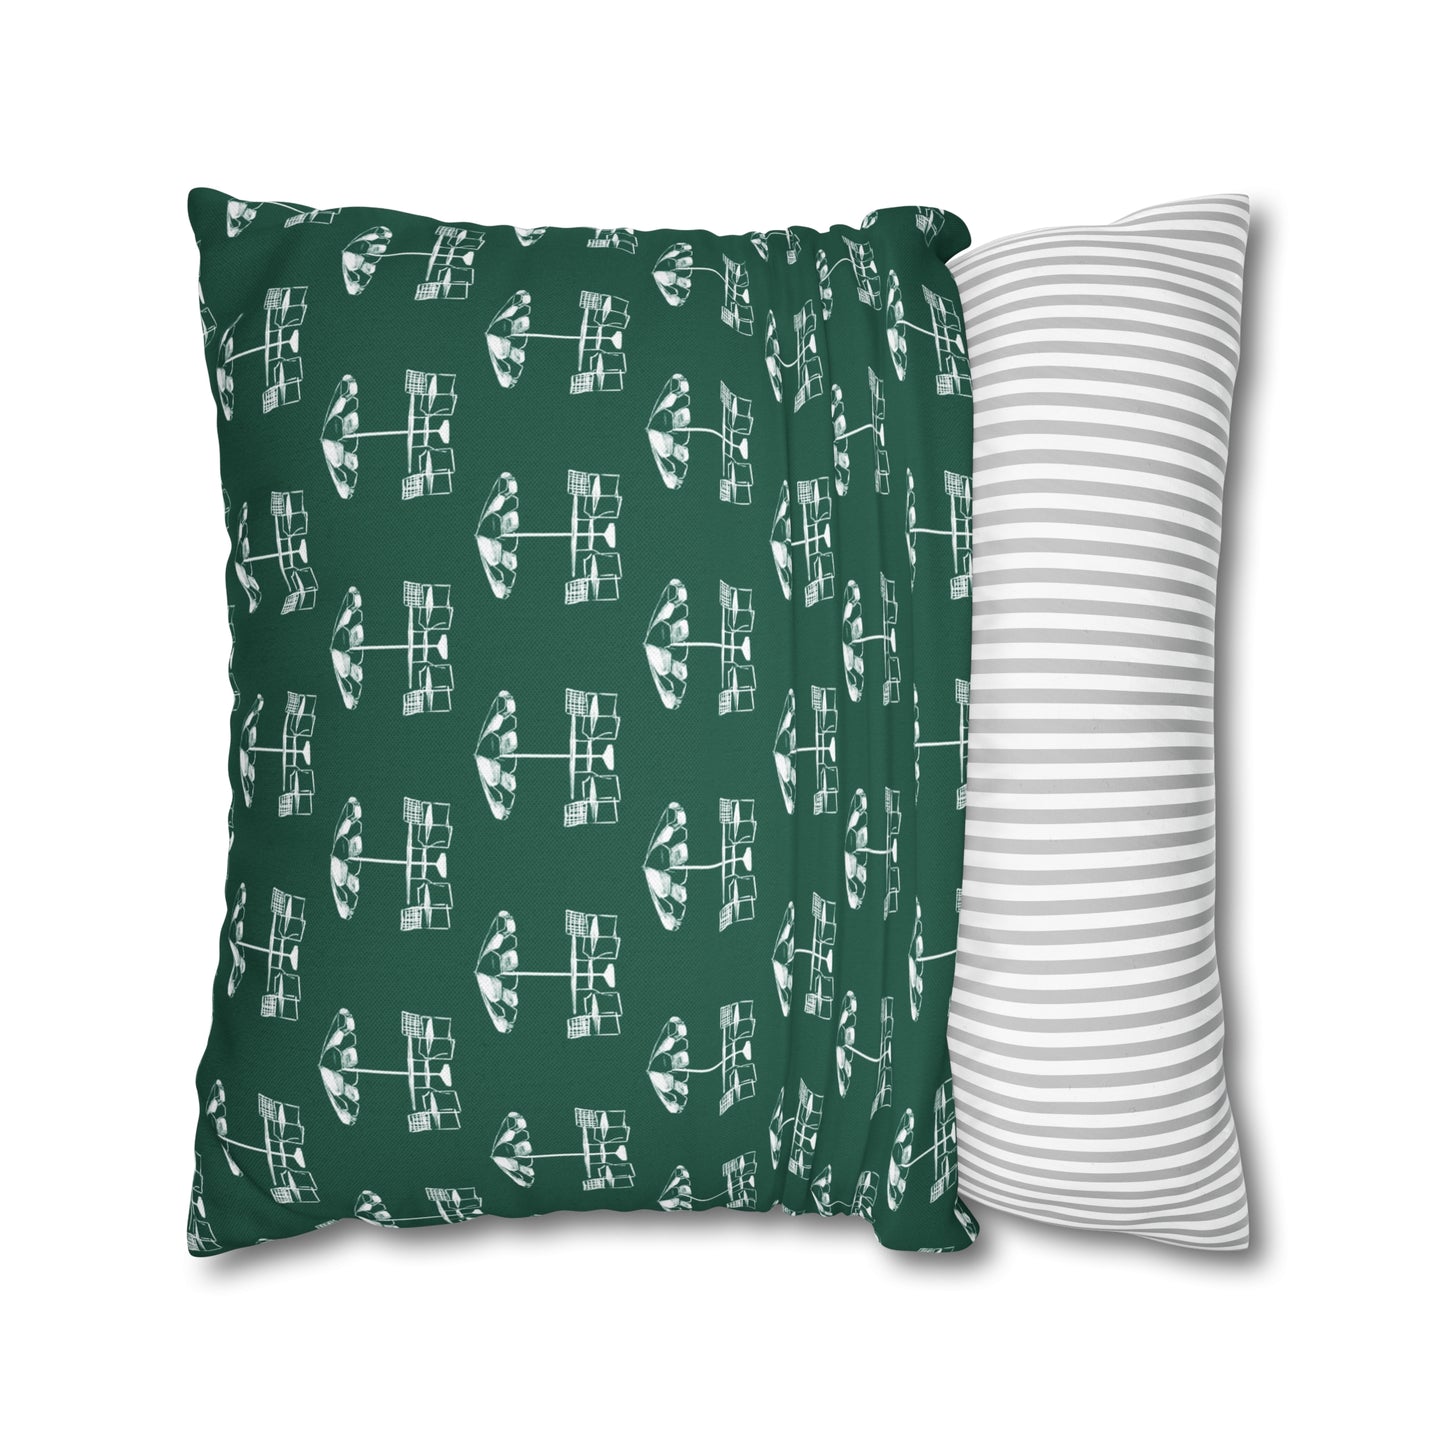 Augusta Green Umbrellas, Pillow Case Only